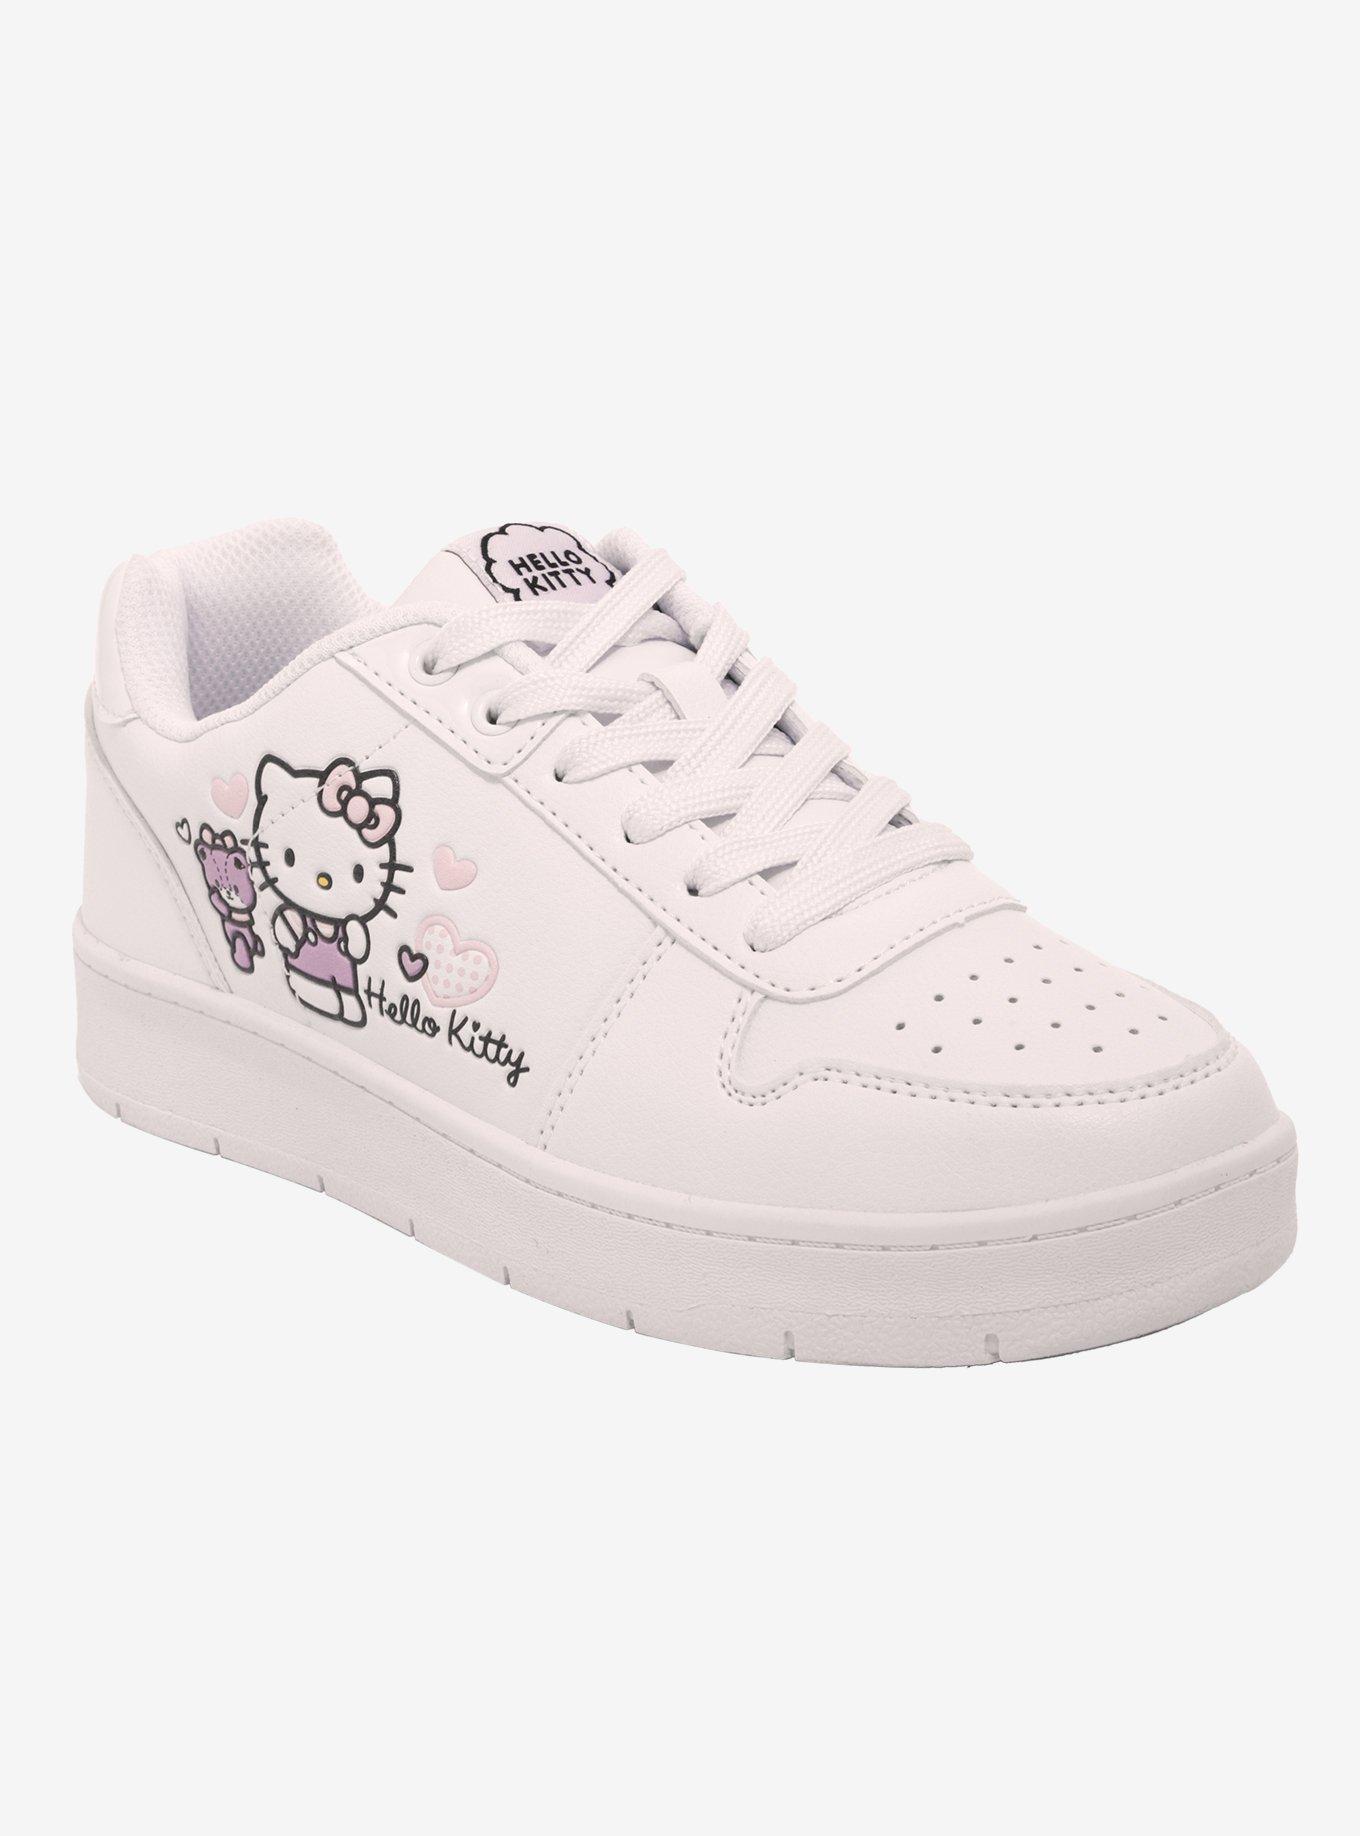 Hello Kitty Hearts White Sneakers, MULTI, hi-res